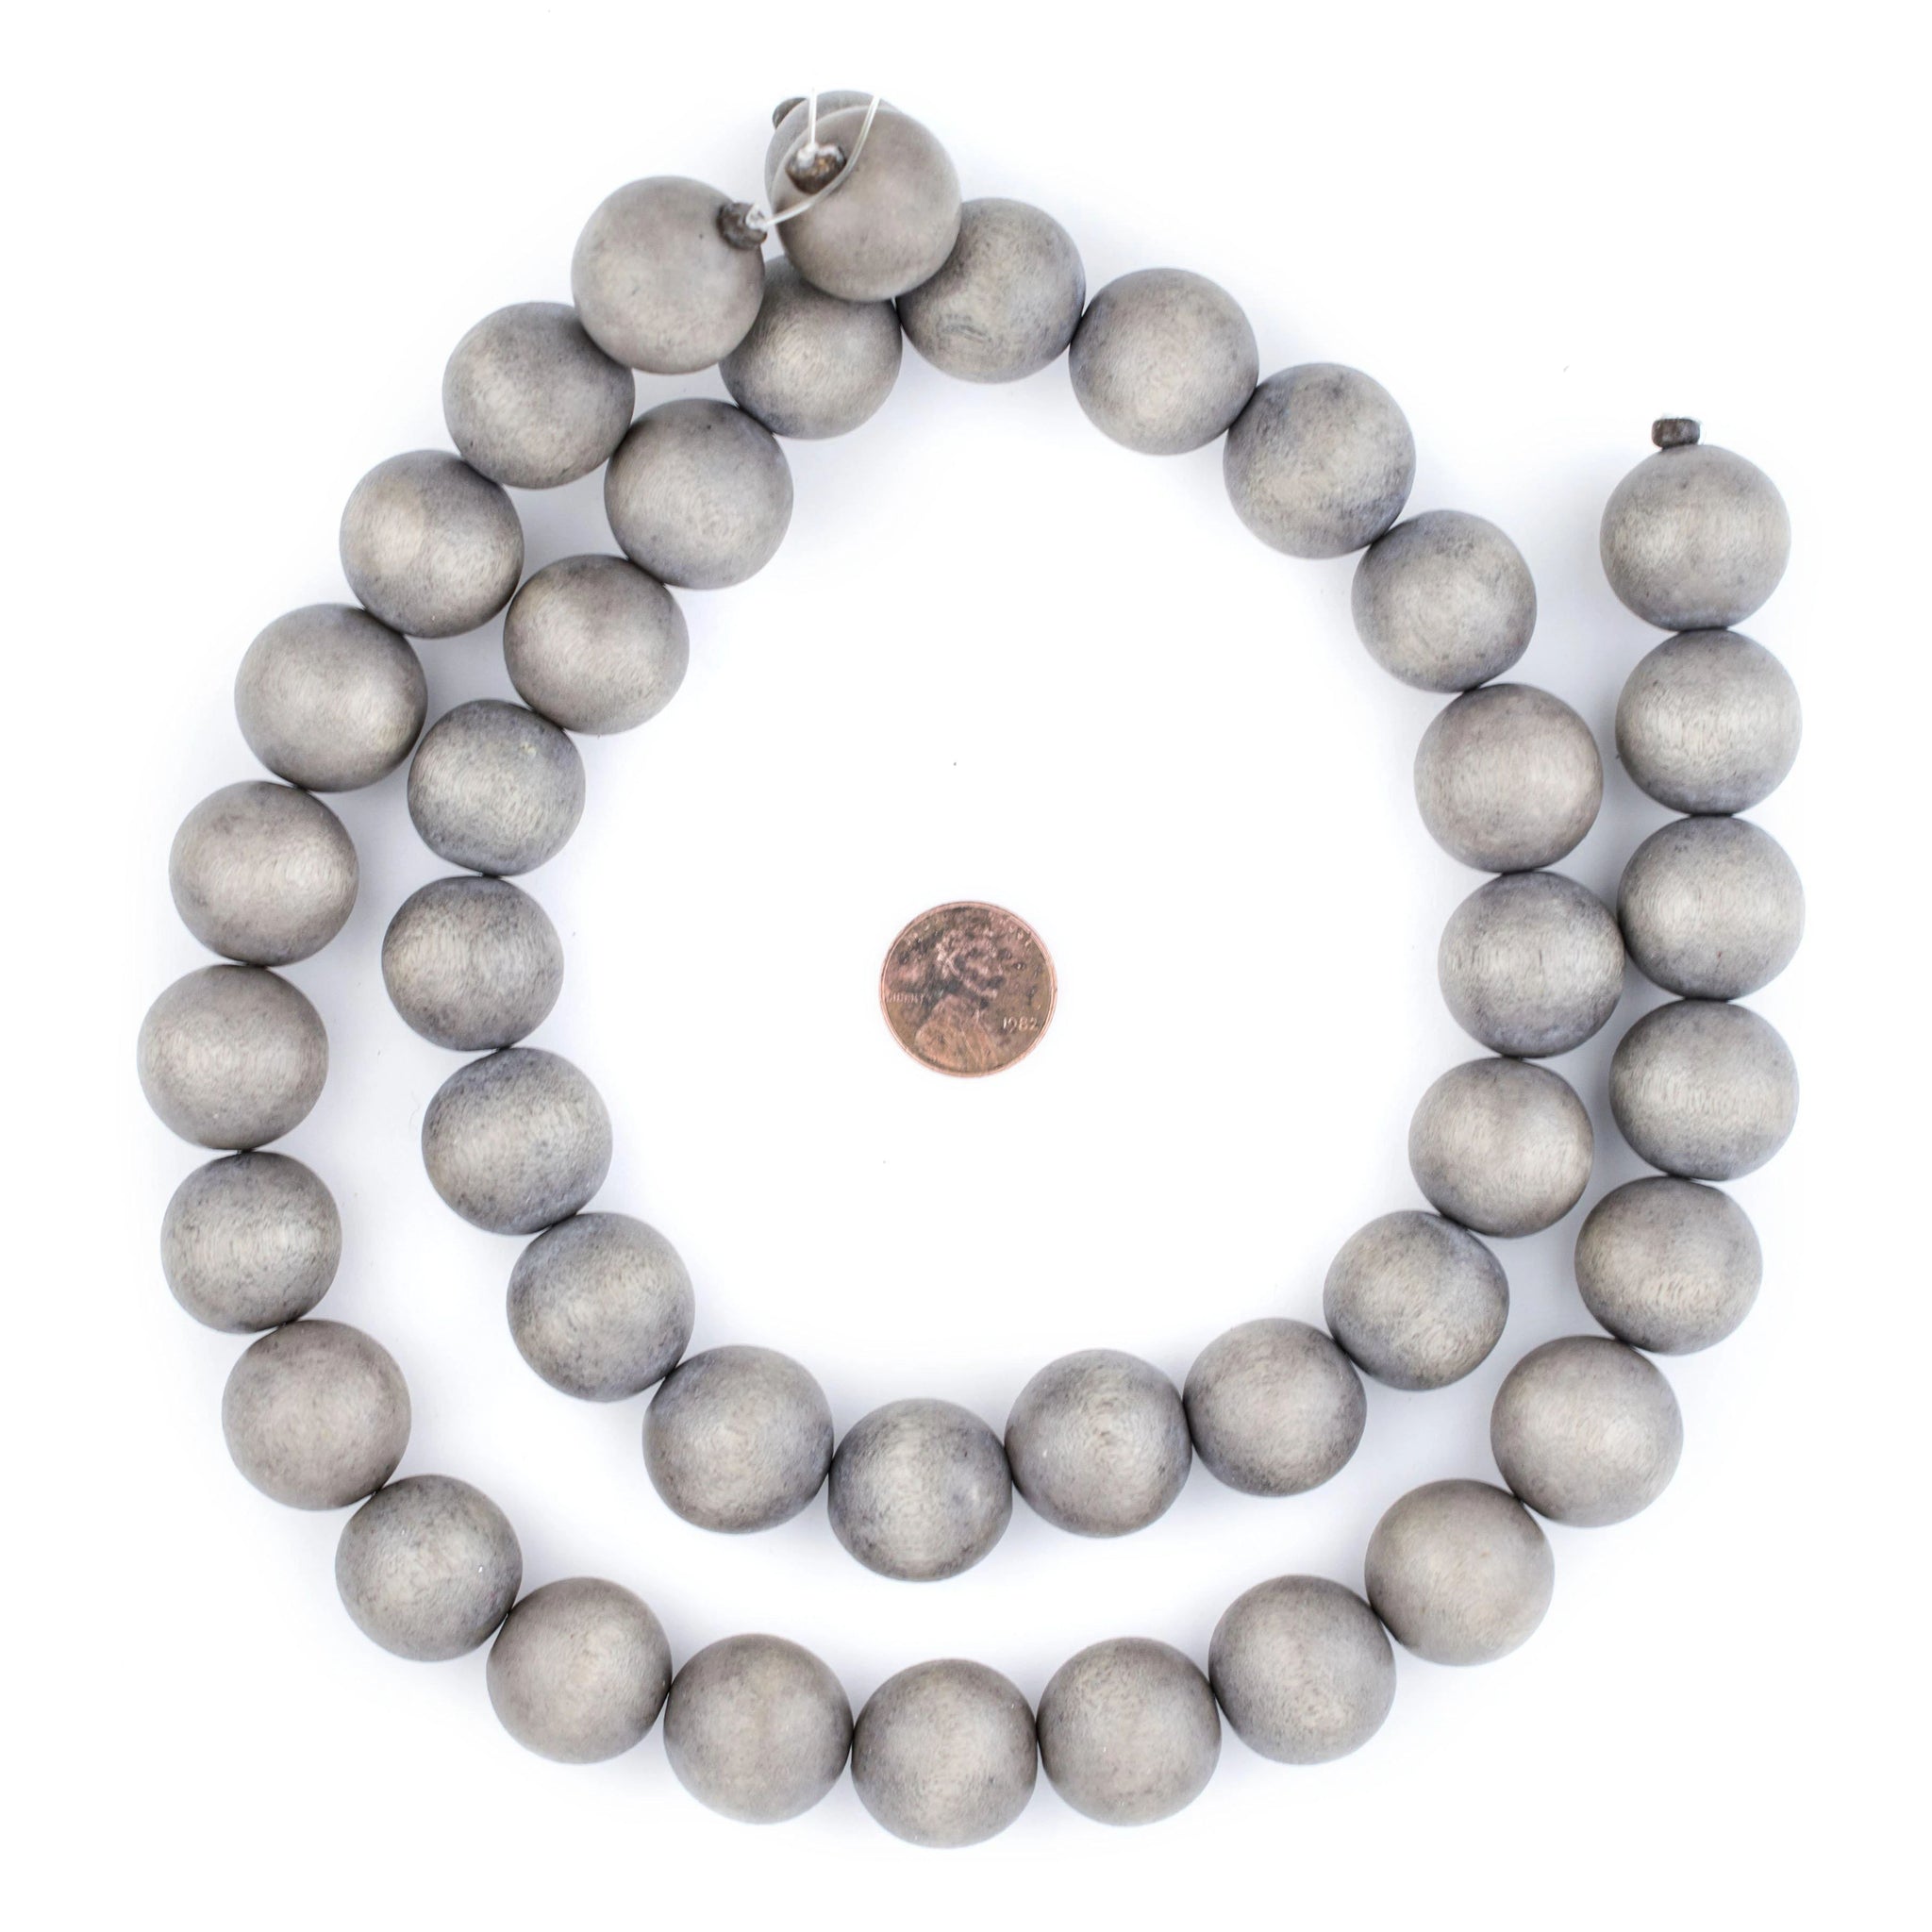 Grey Natural Wood Beads